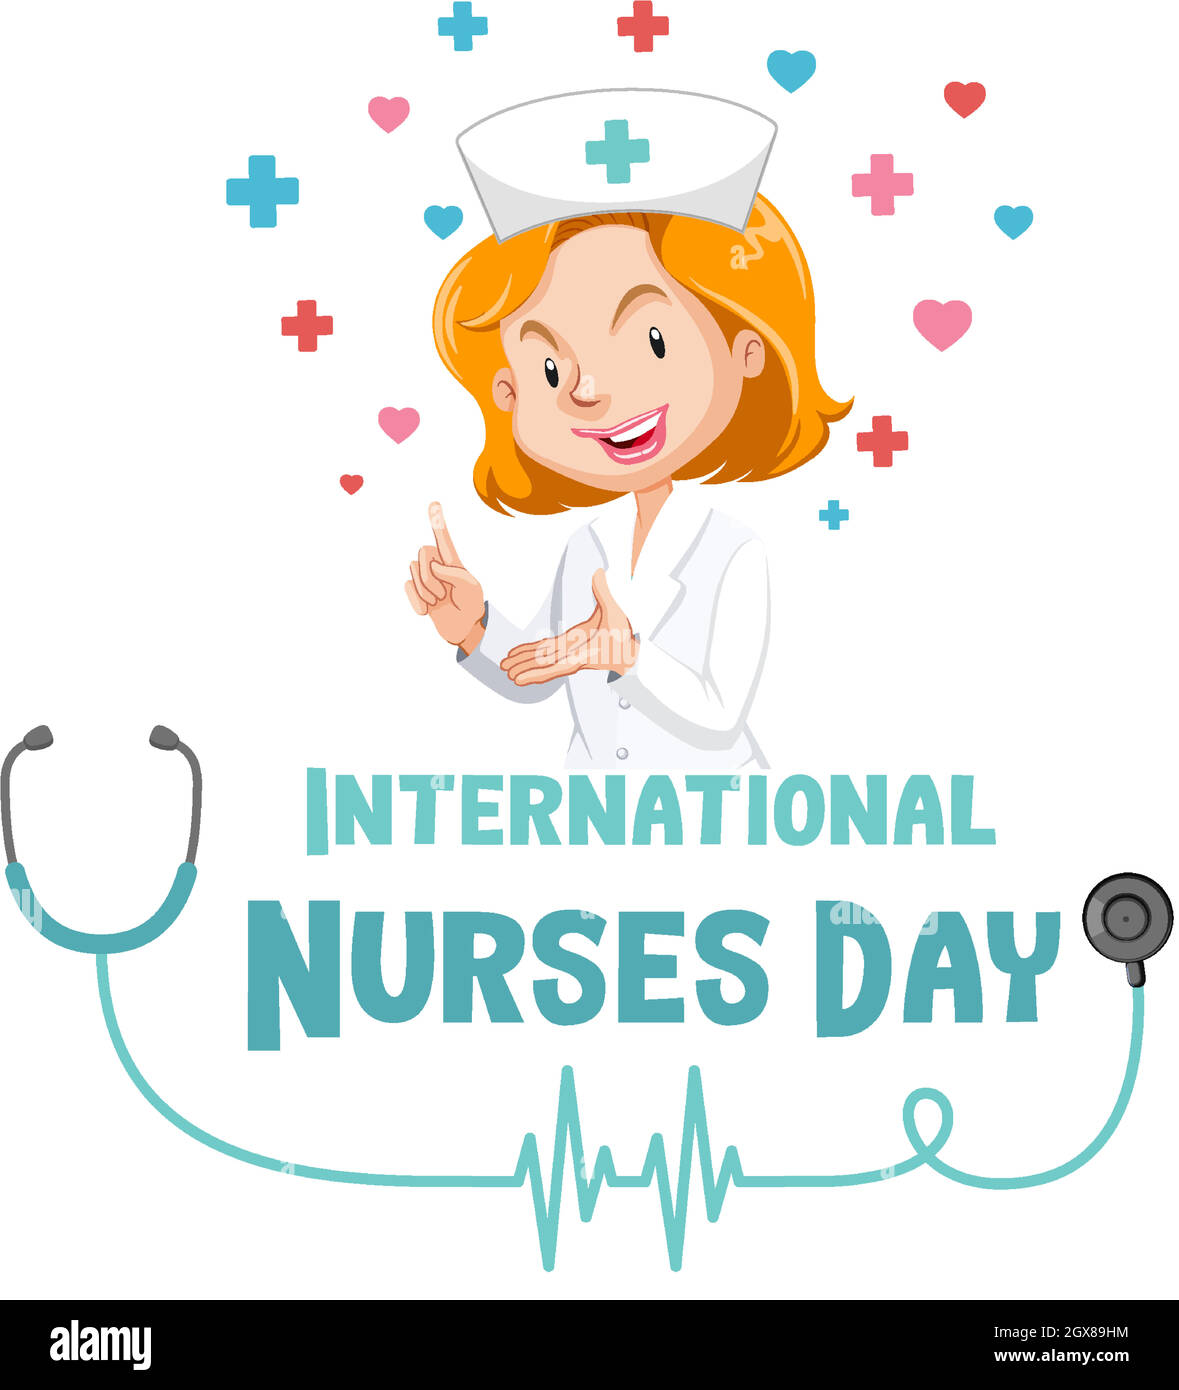 Happy International Nurses Day font with nurse cartoon character ...